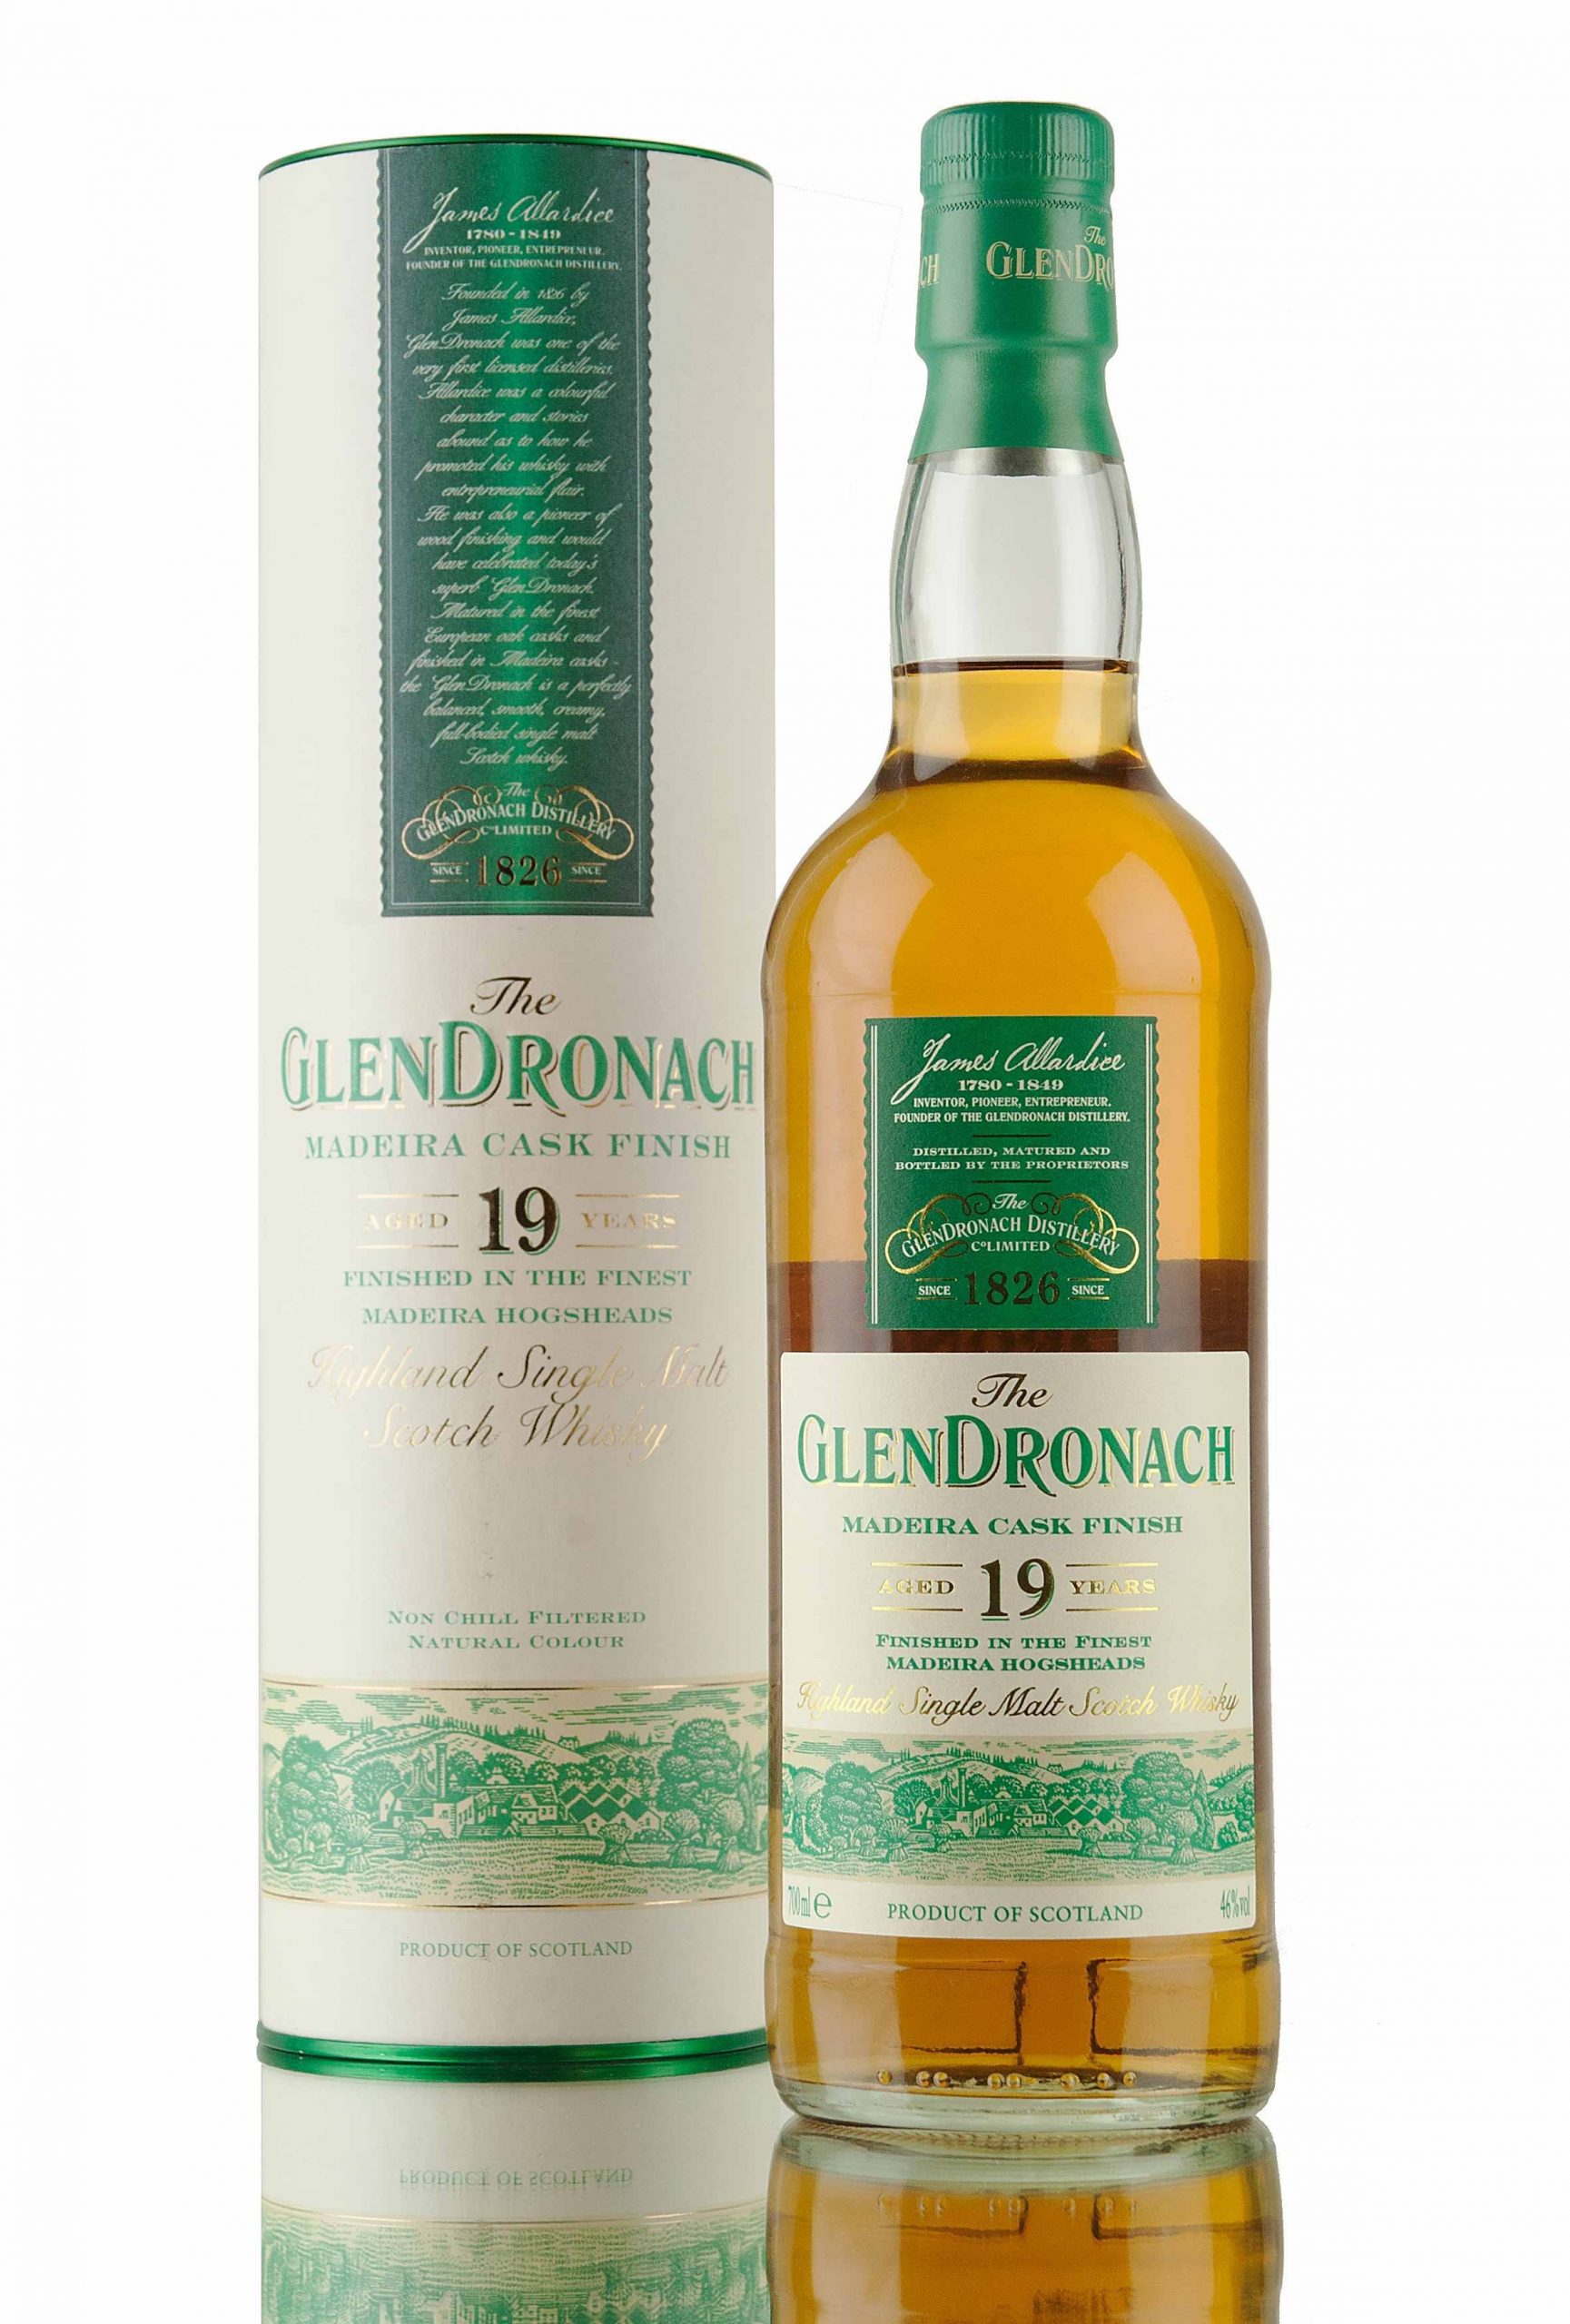 Glendronach Madeira finish 19 years old whisky